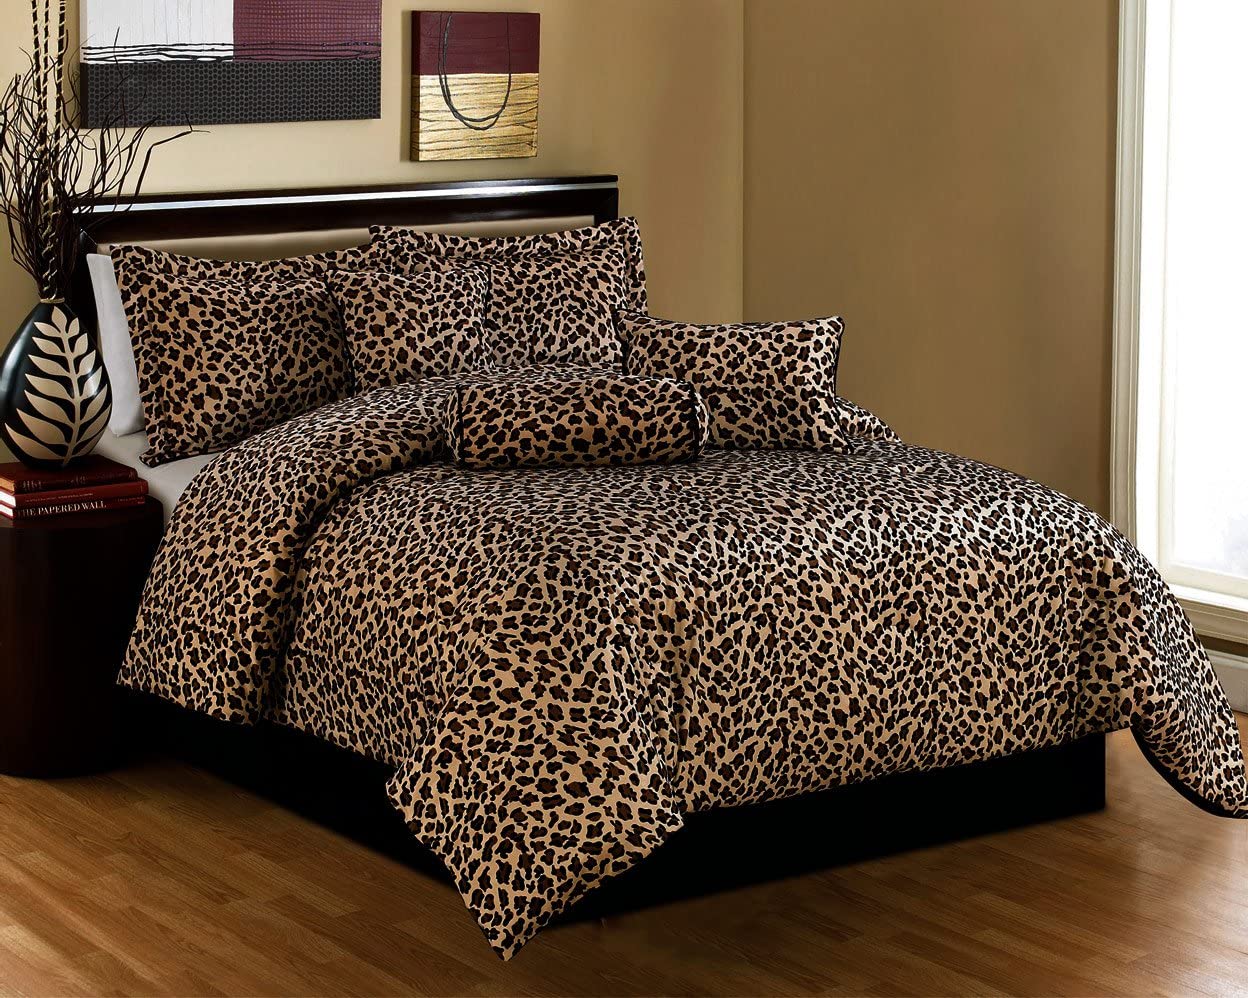 Grand Linen Black/Brown Comforter Set Leopard/Zebra Print Microfur Bed in A  Bag | eBay